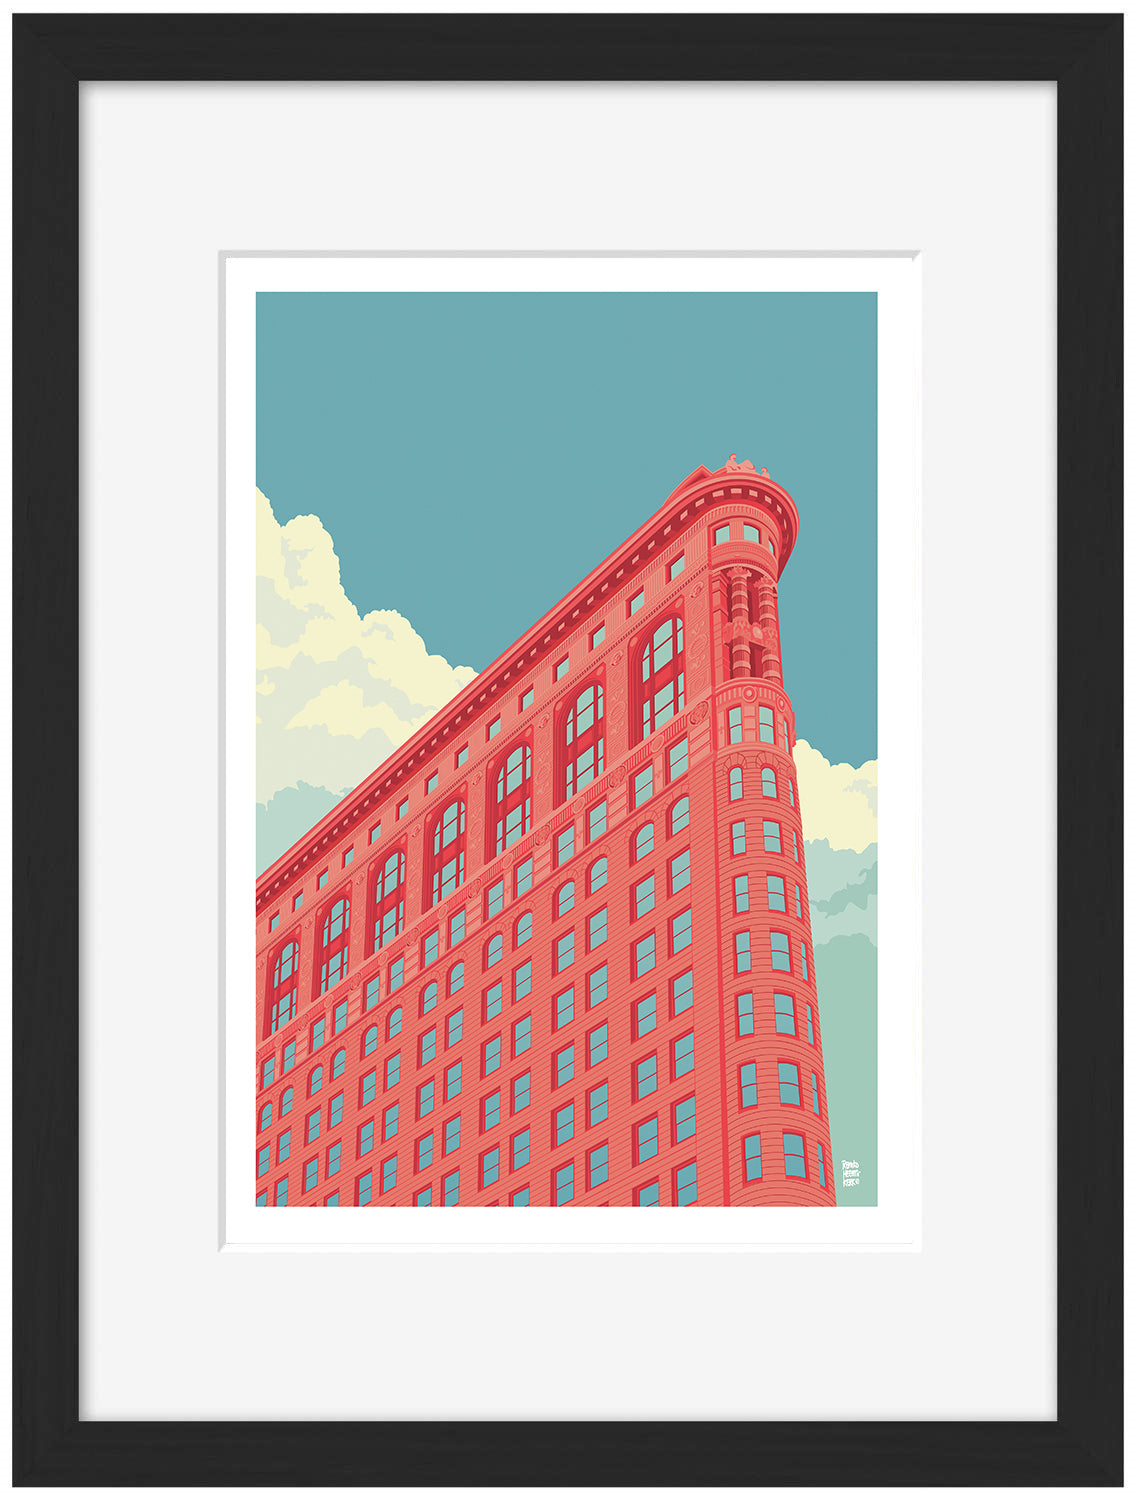 NYC Flatiron Building-print, remko-heemskerk-Framed Print-30 x 40 cm-BLUE SHAKER